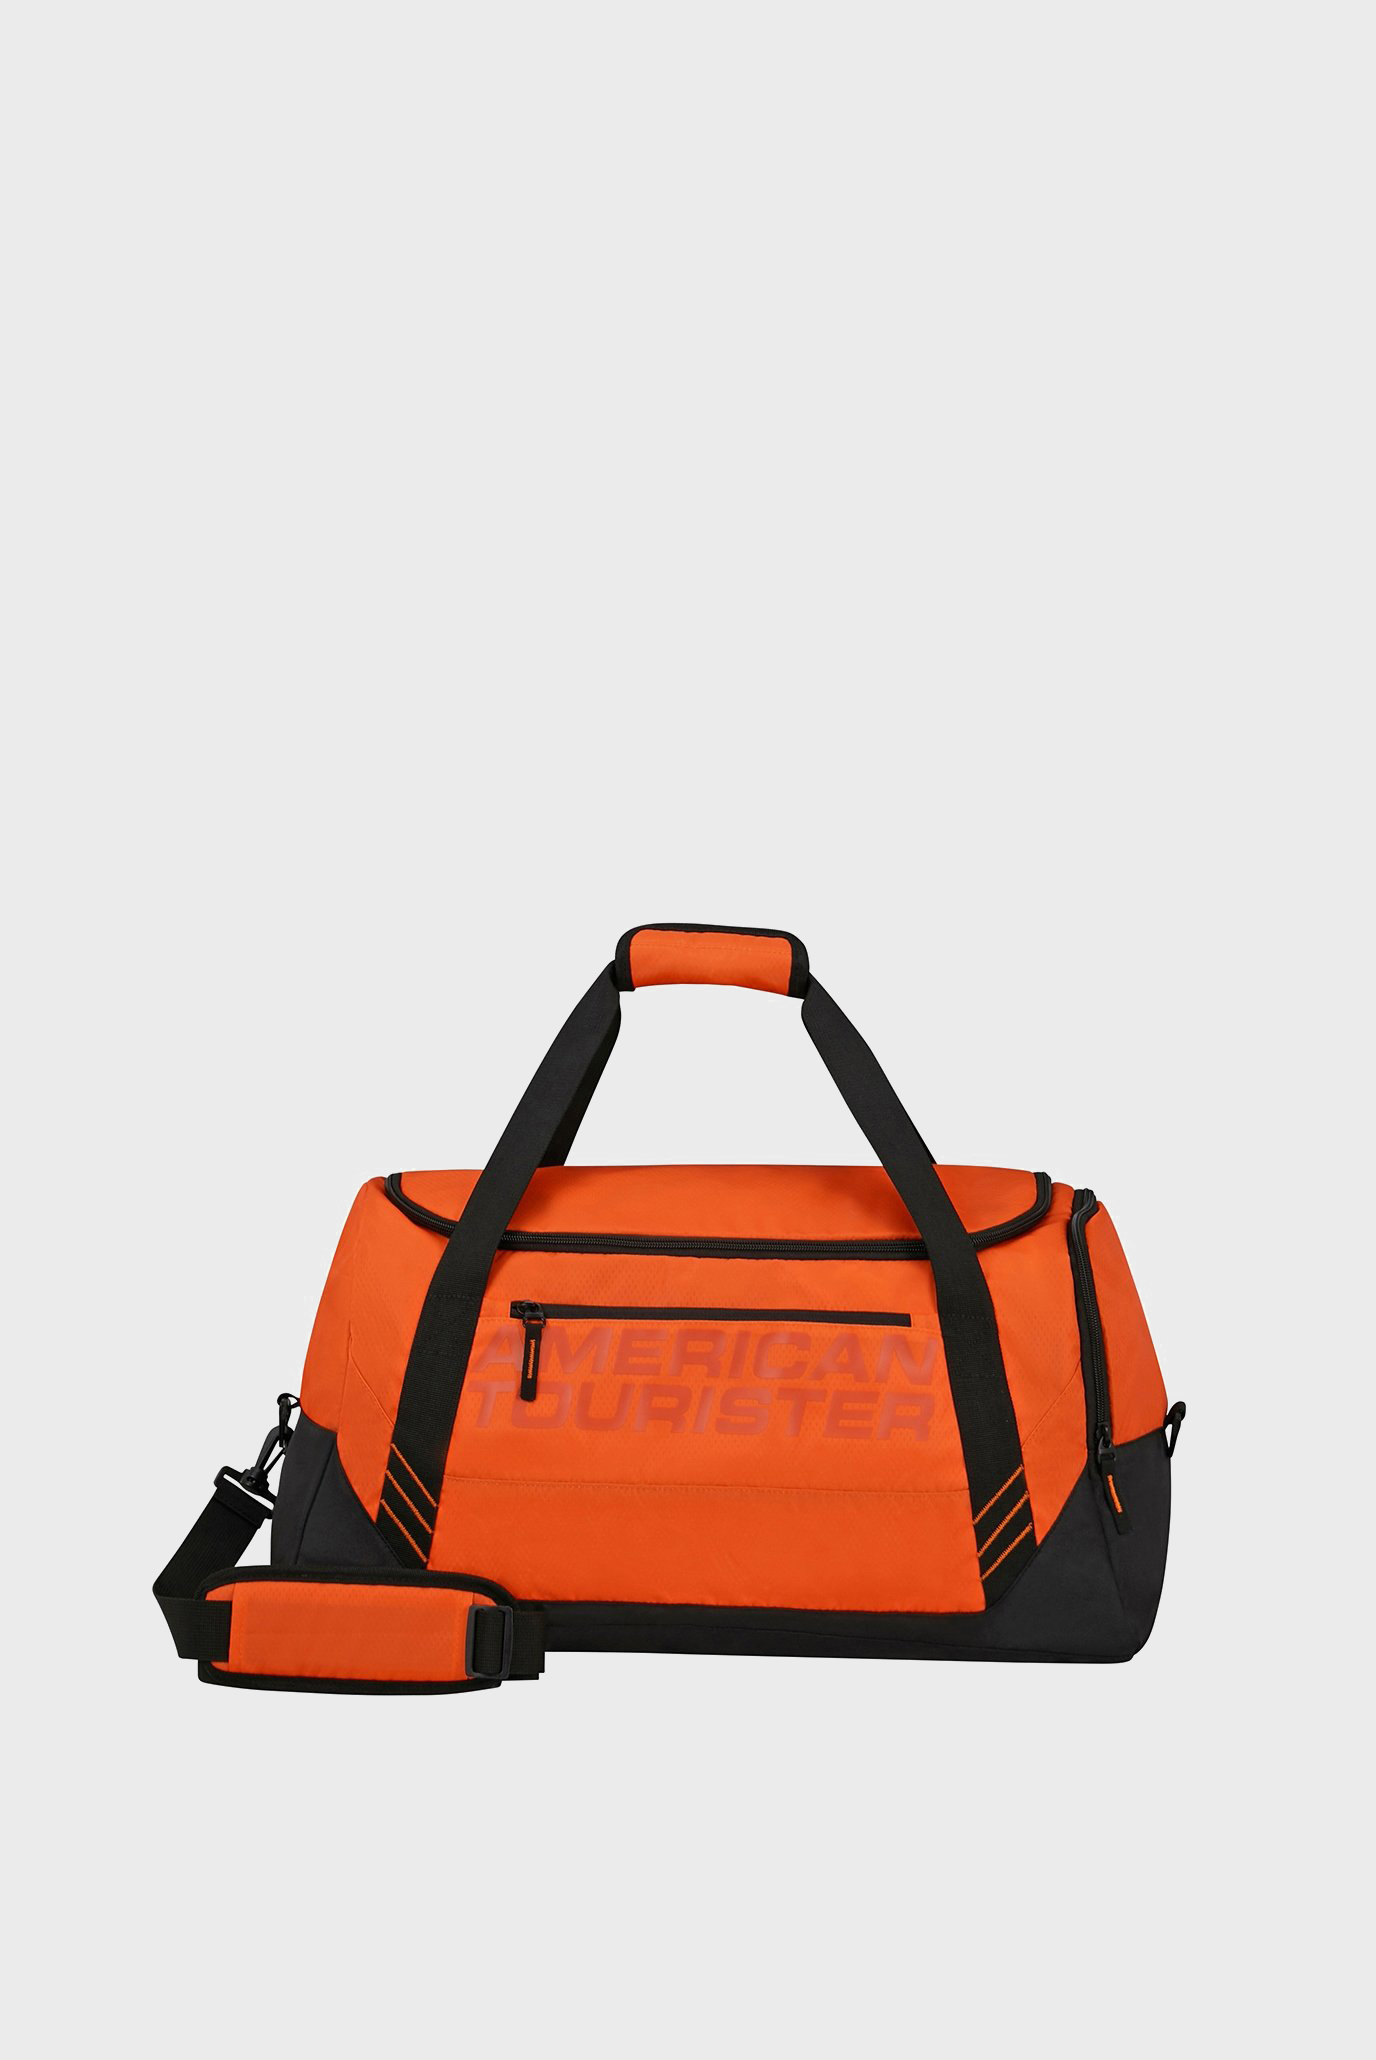 Оранжевая спортивная сумка URBAN GROOVE ORANGE 1